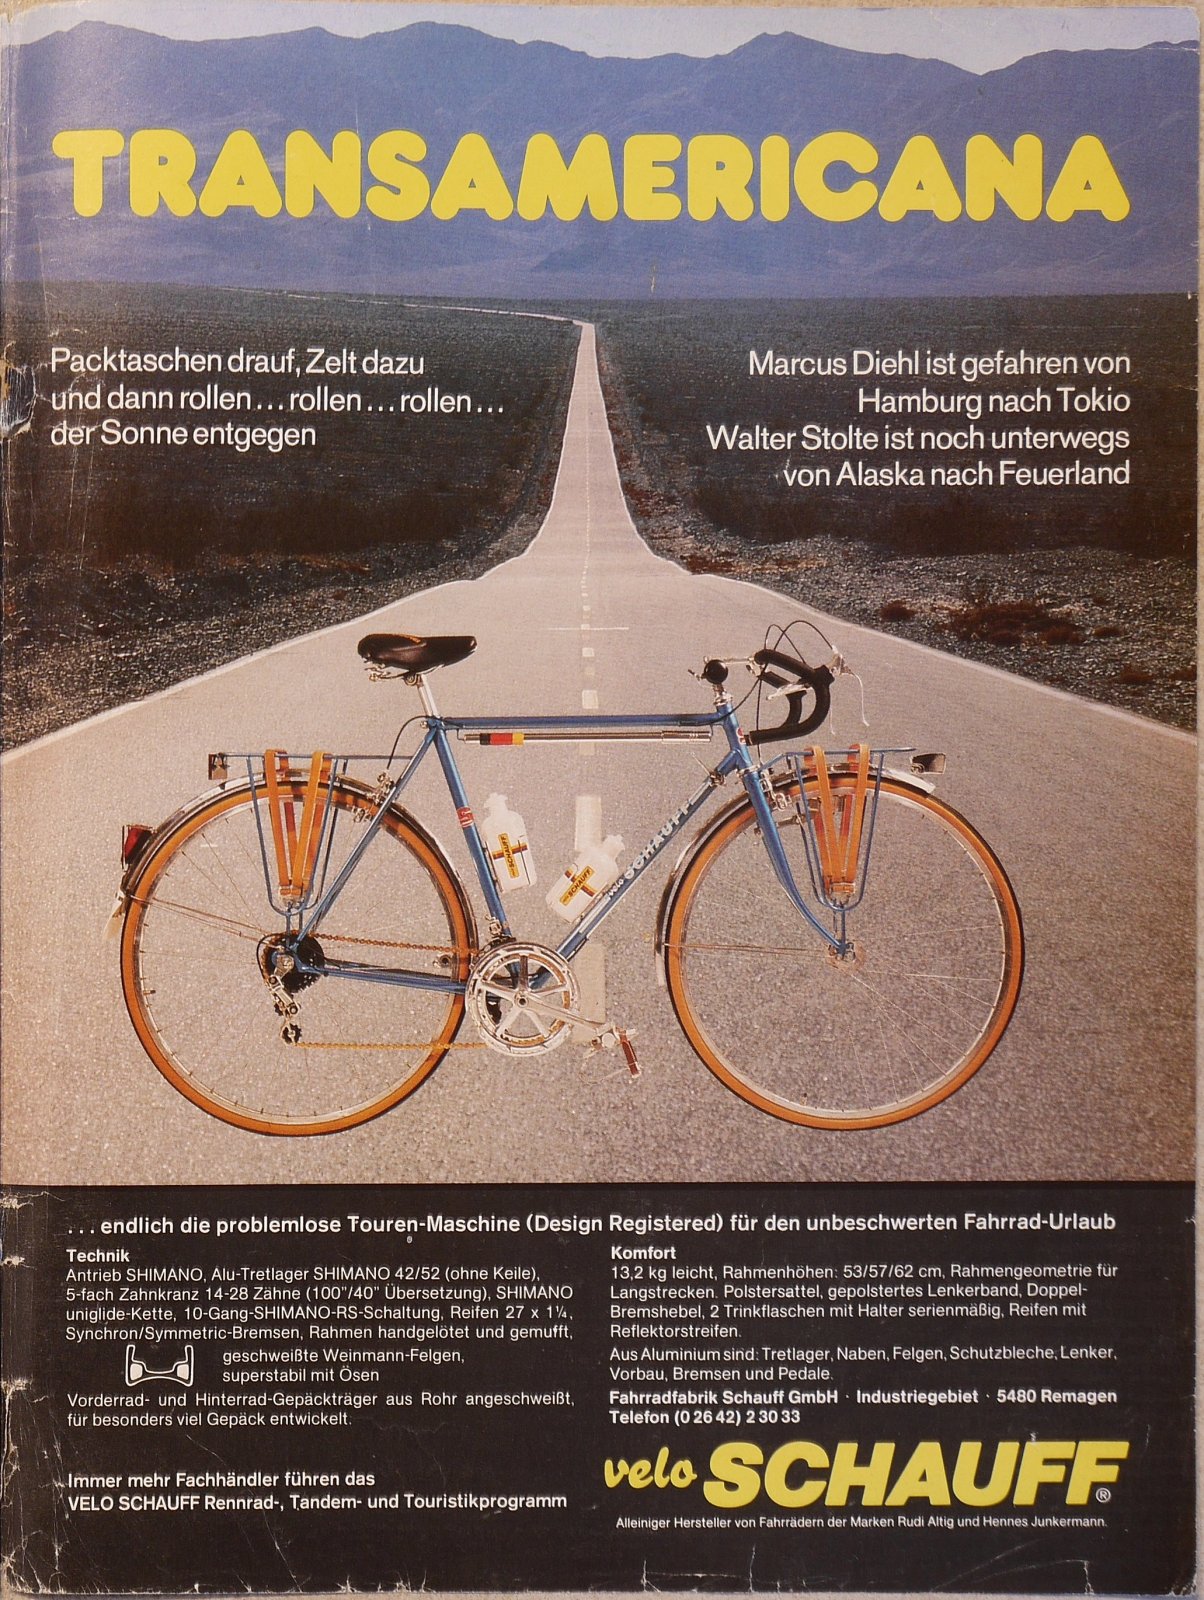 Tour 1983-04 Seite 71 Schauff Transamericana.jpg